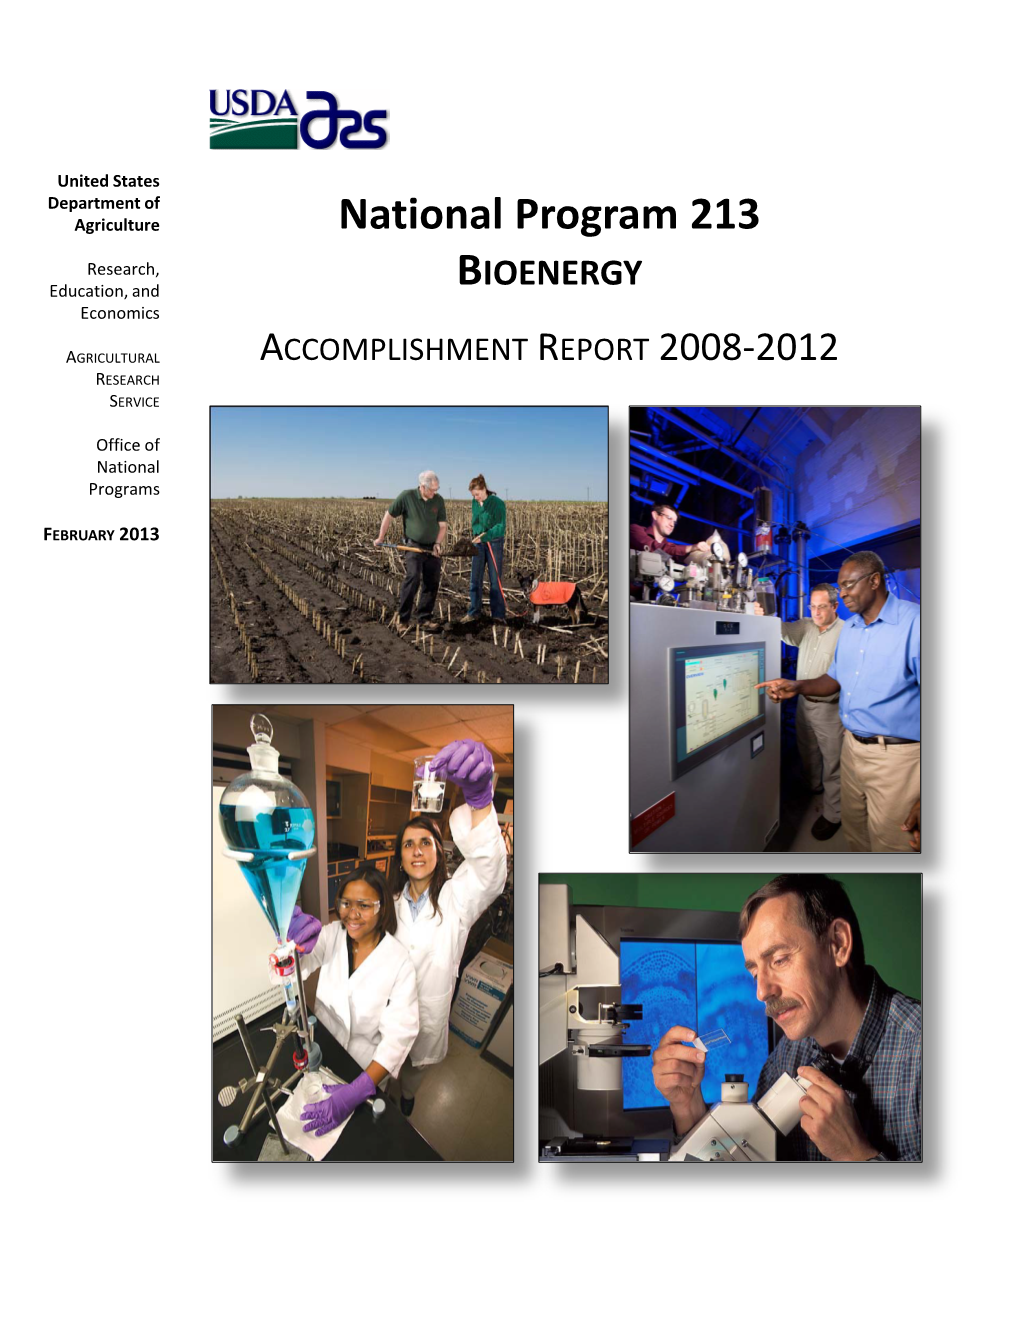 National Program 213 Bioenergy